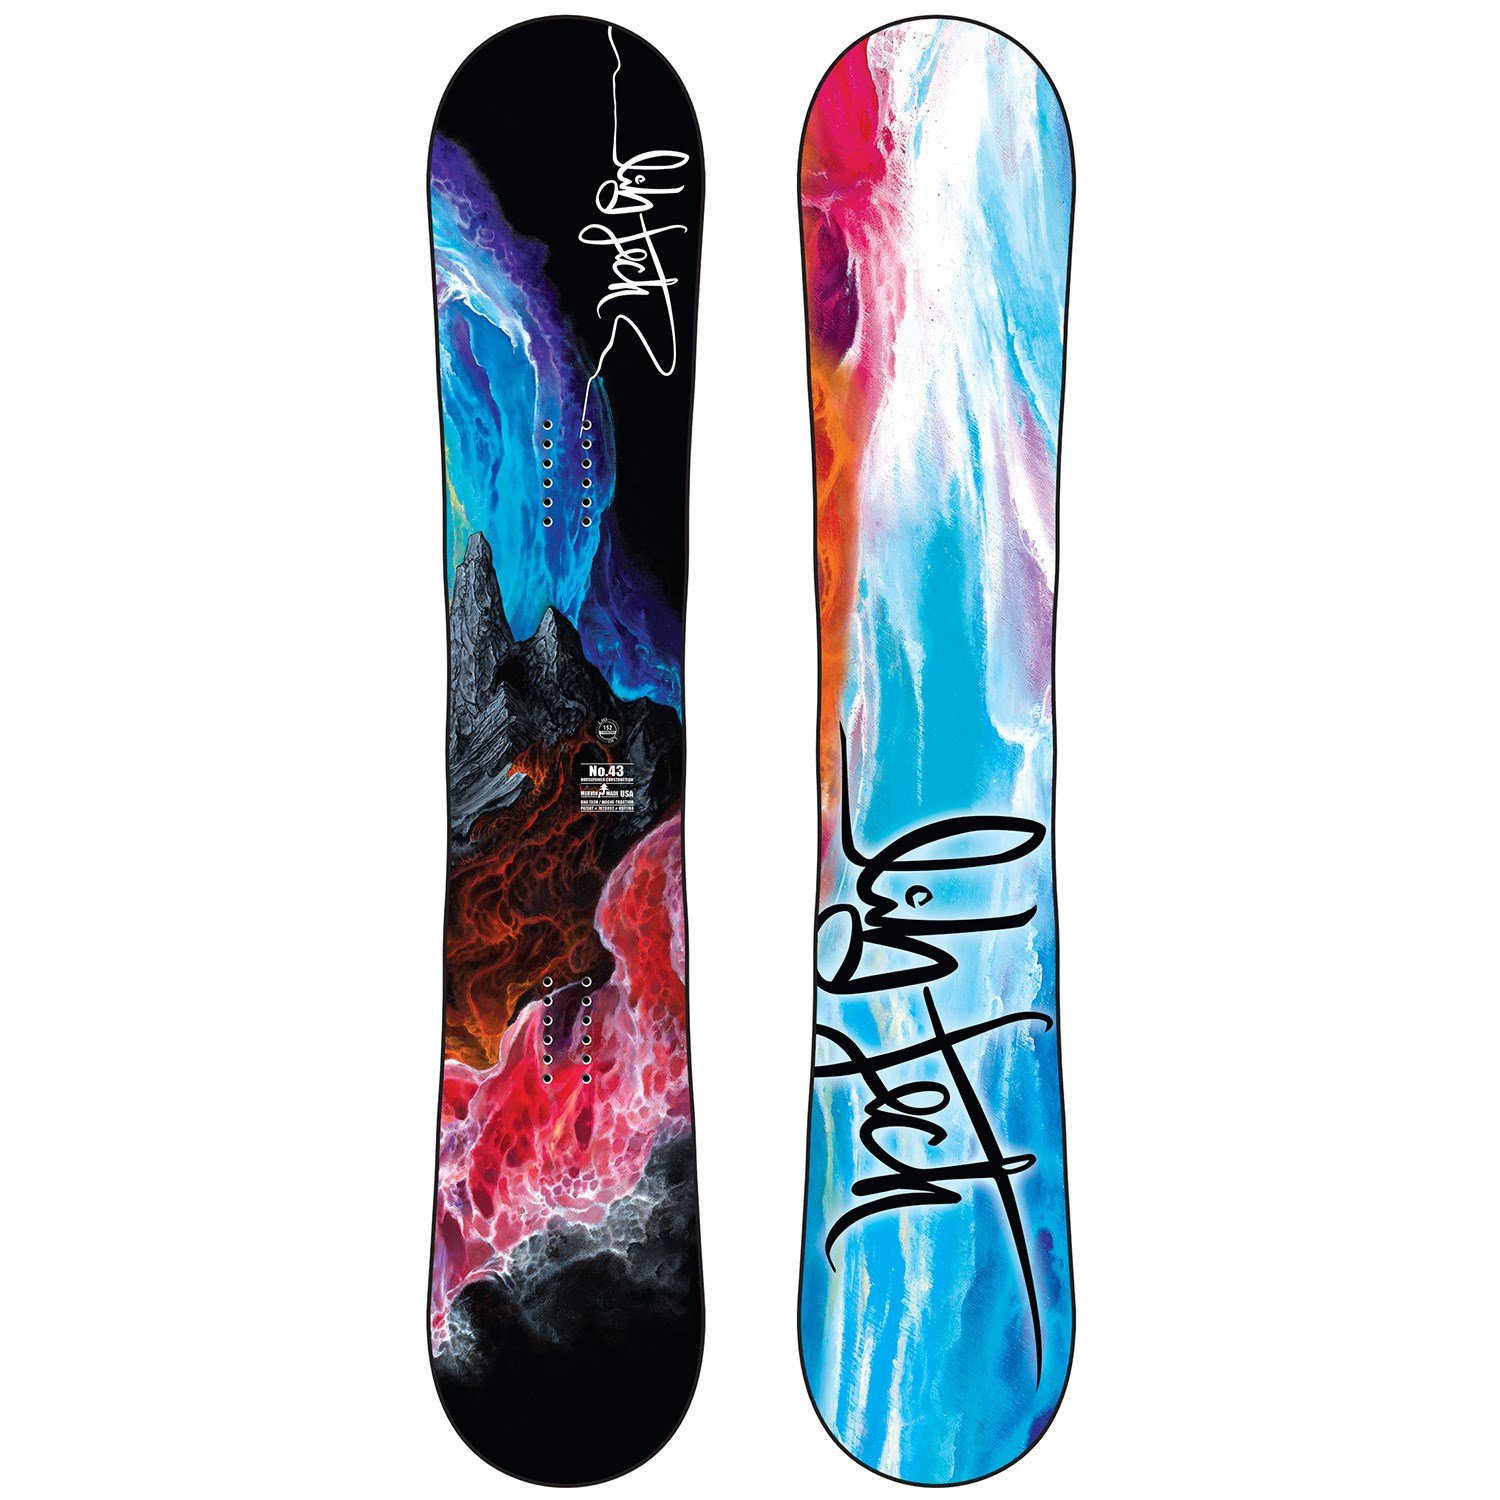 LIB TECH snowboard skateboard surf ski 2014 BIG LOGO DIE CUT STICKER #5 New 